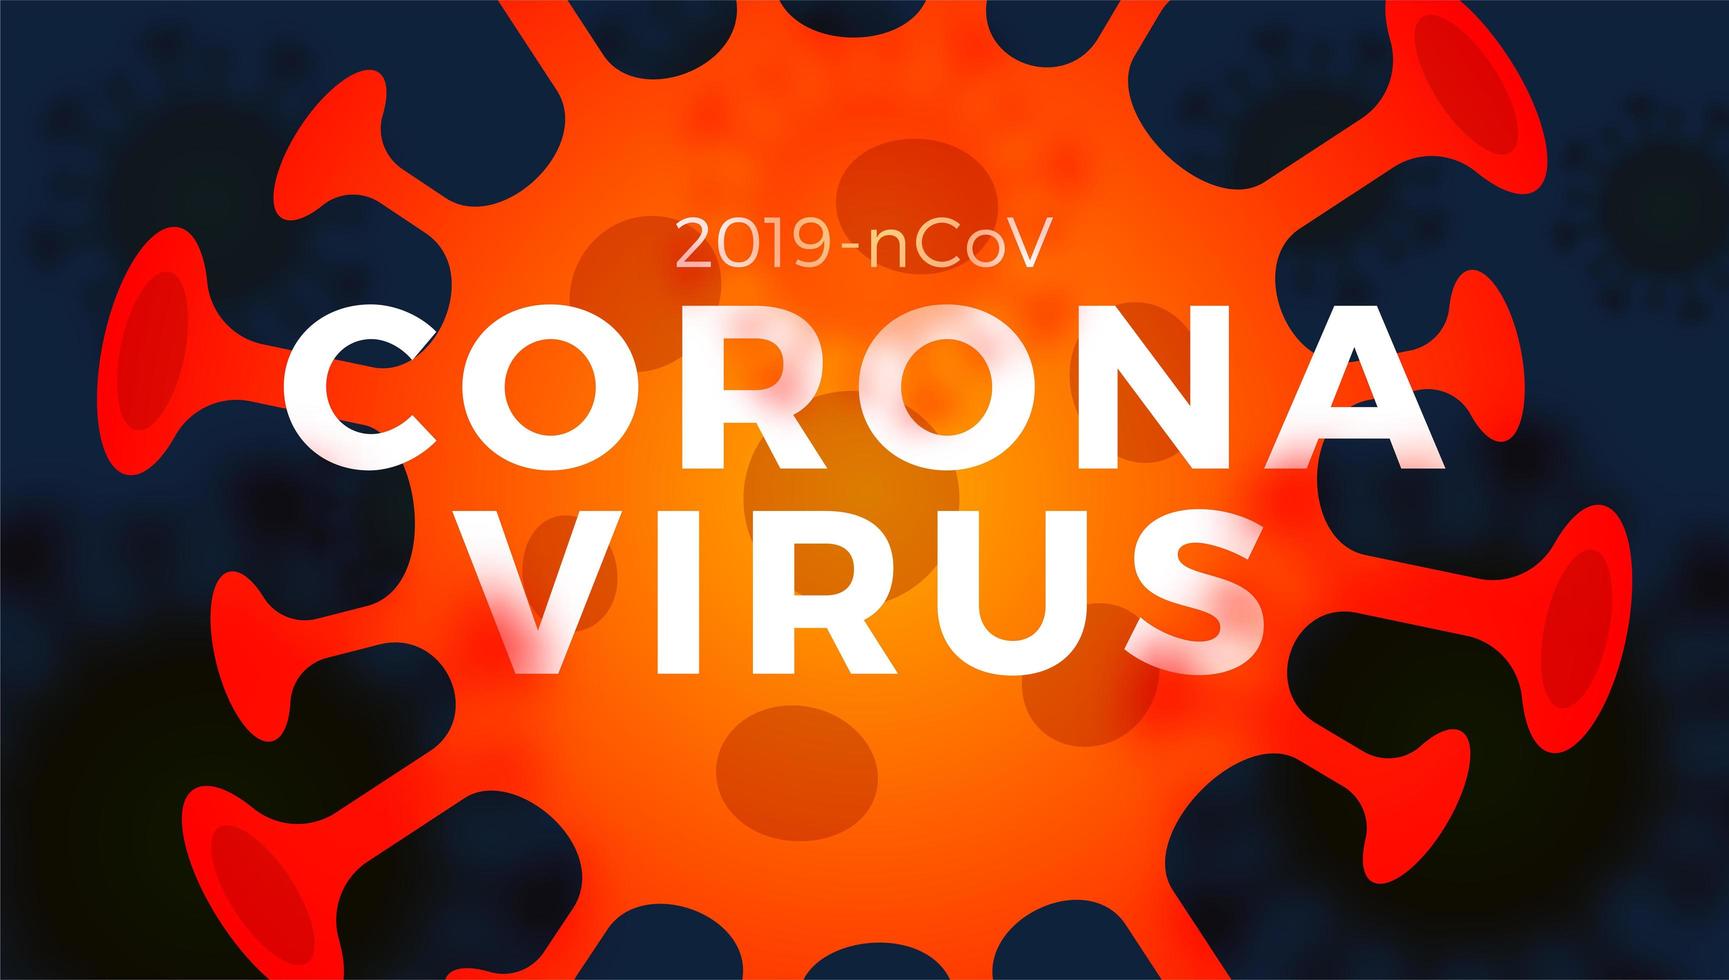 vektor 2019-ncov coronavirus celler illustration